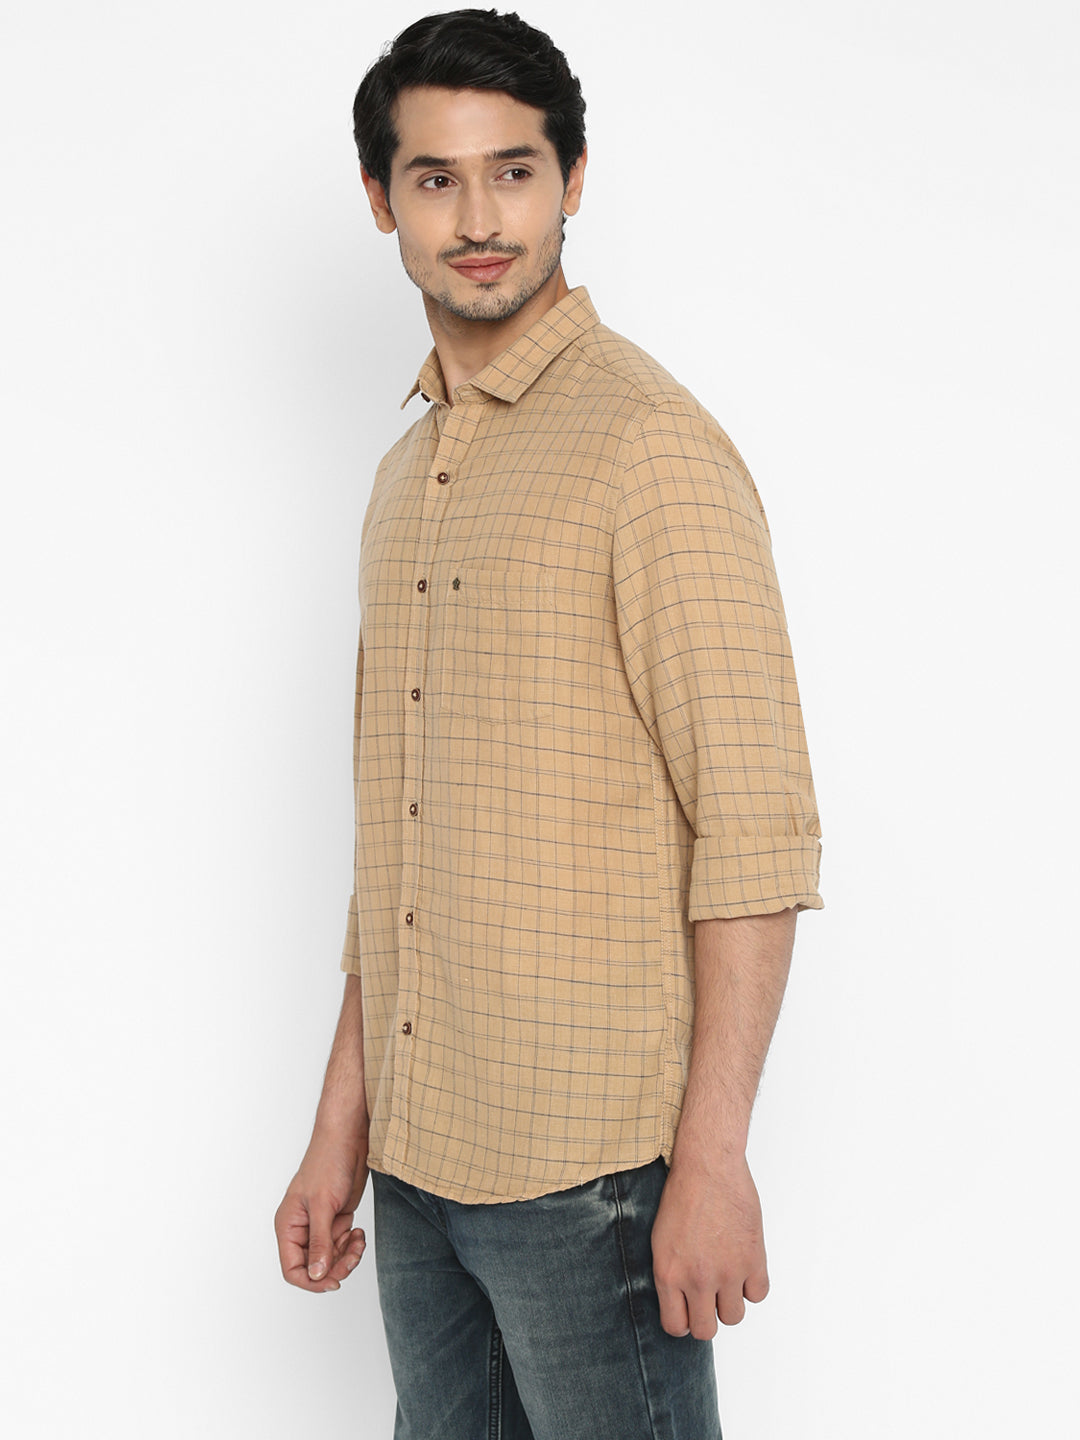 Cotton Linen Khaki Checkered Slim Fit Casual Shirt